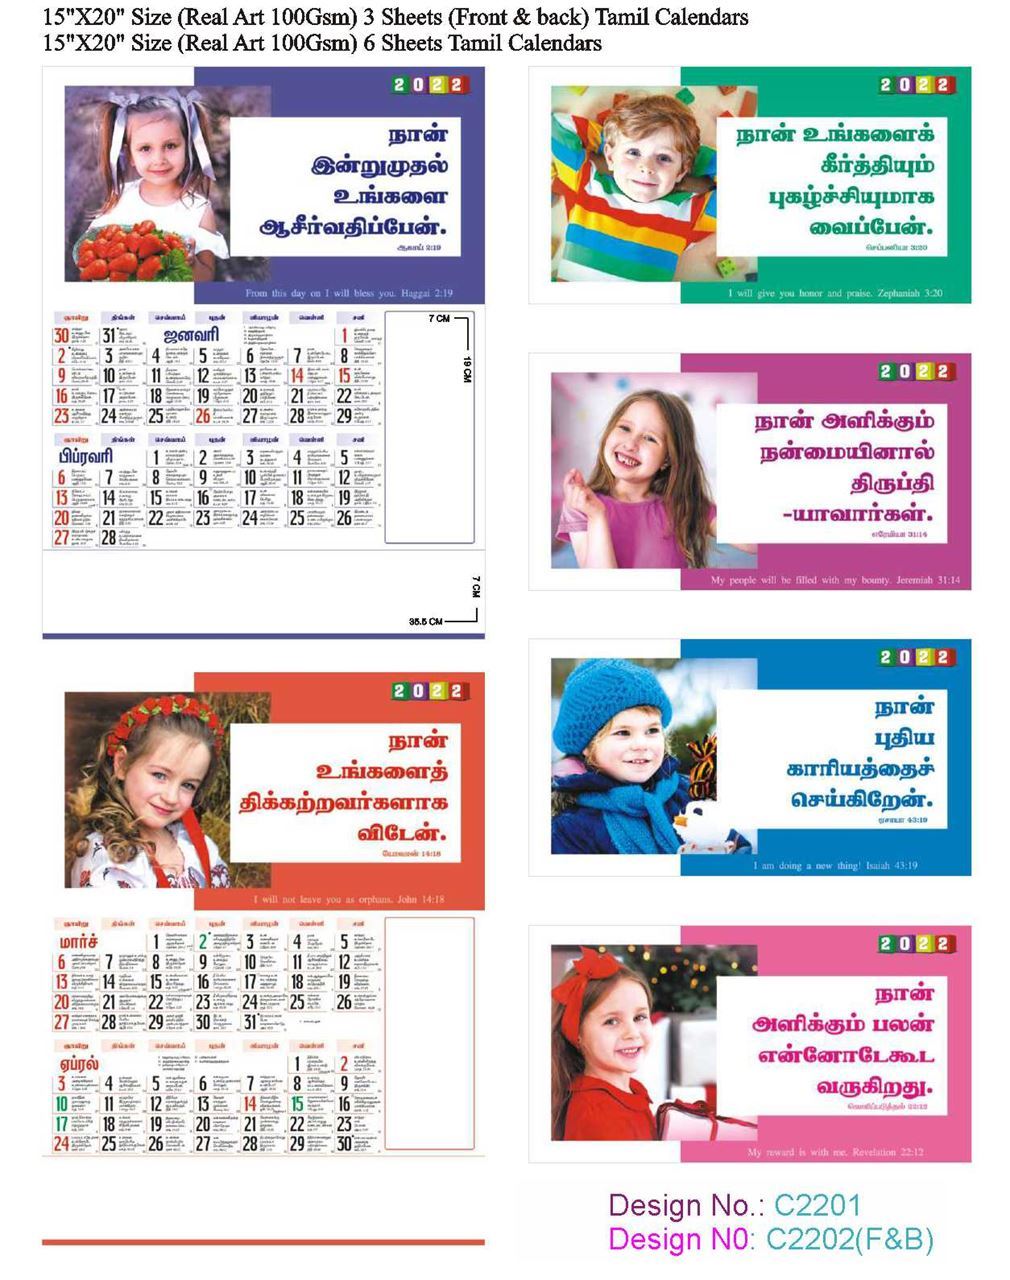 C2202 6 Sheeter Bi-Monthly Tamil Christian Calendars printing 2022